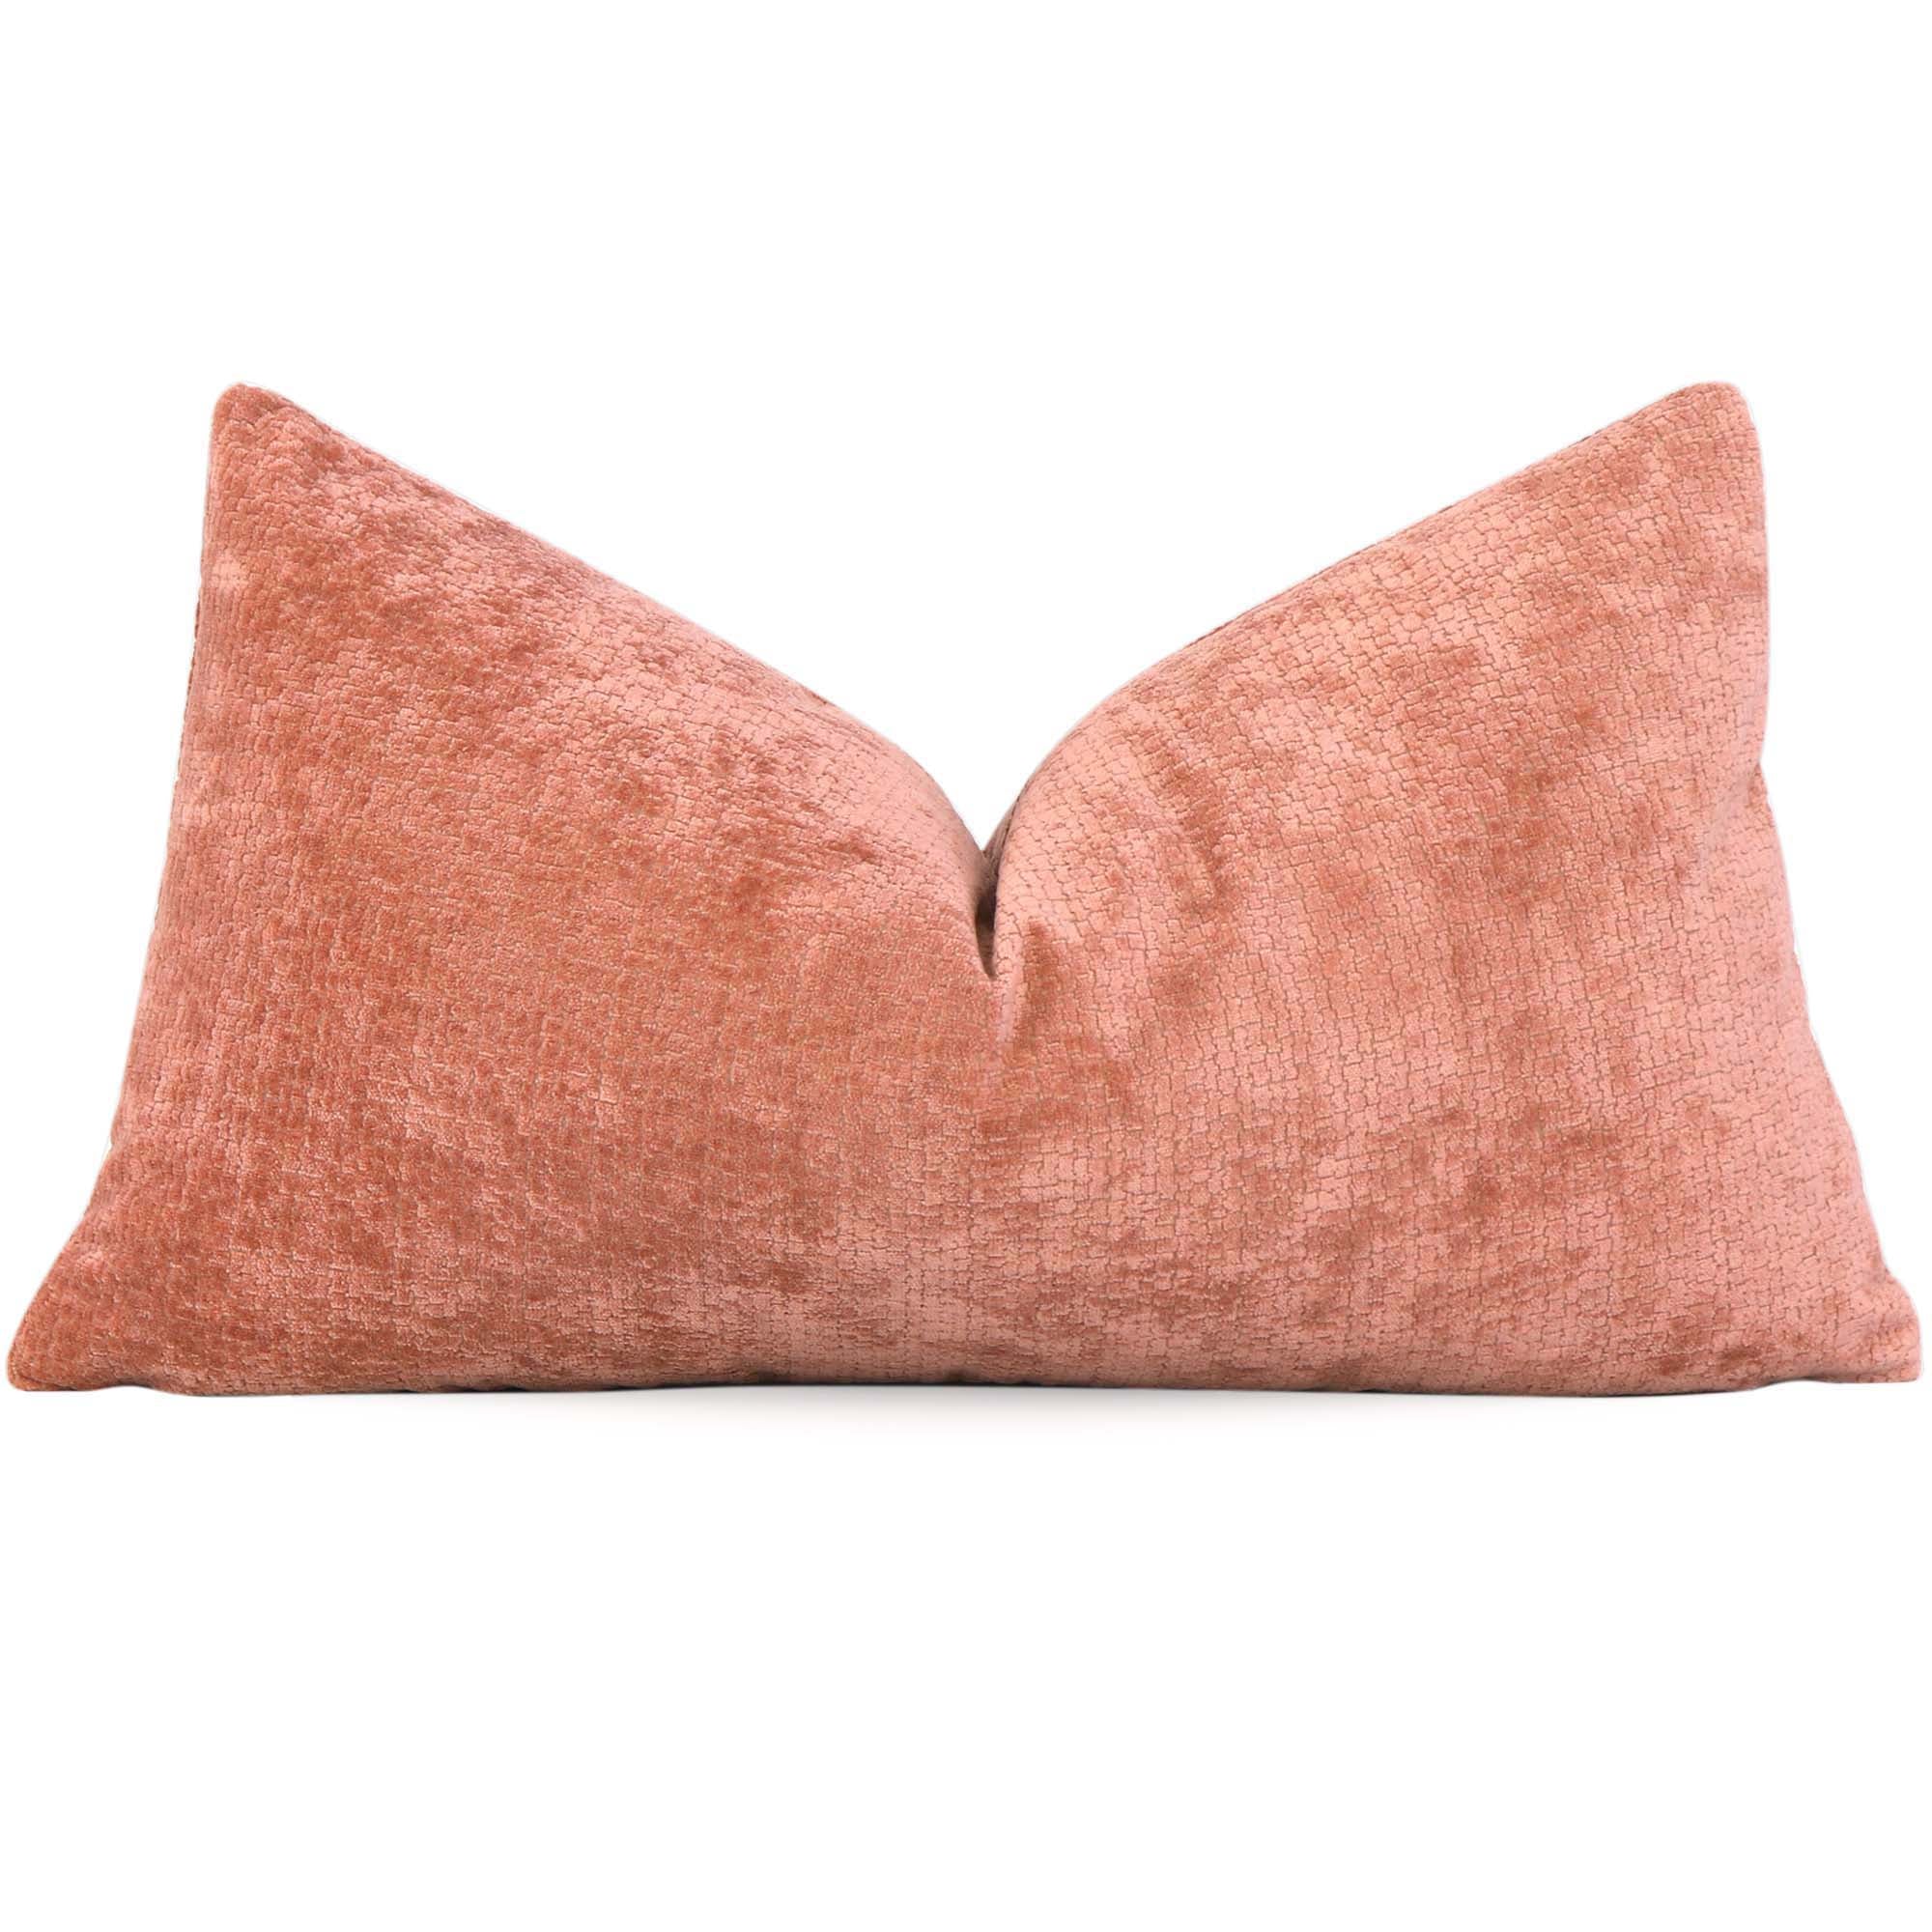 Breadfruit 2 Pillow Covers LV